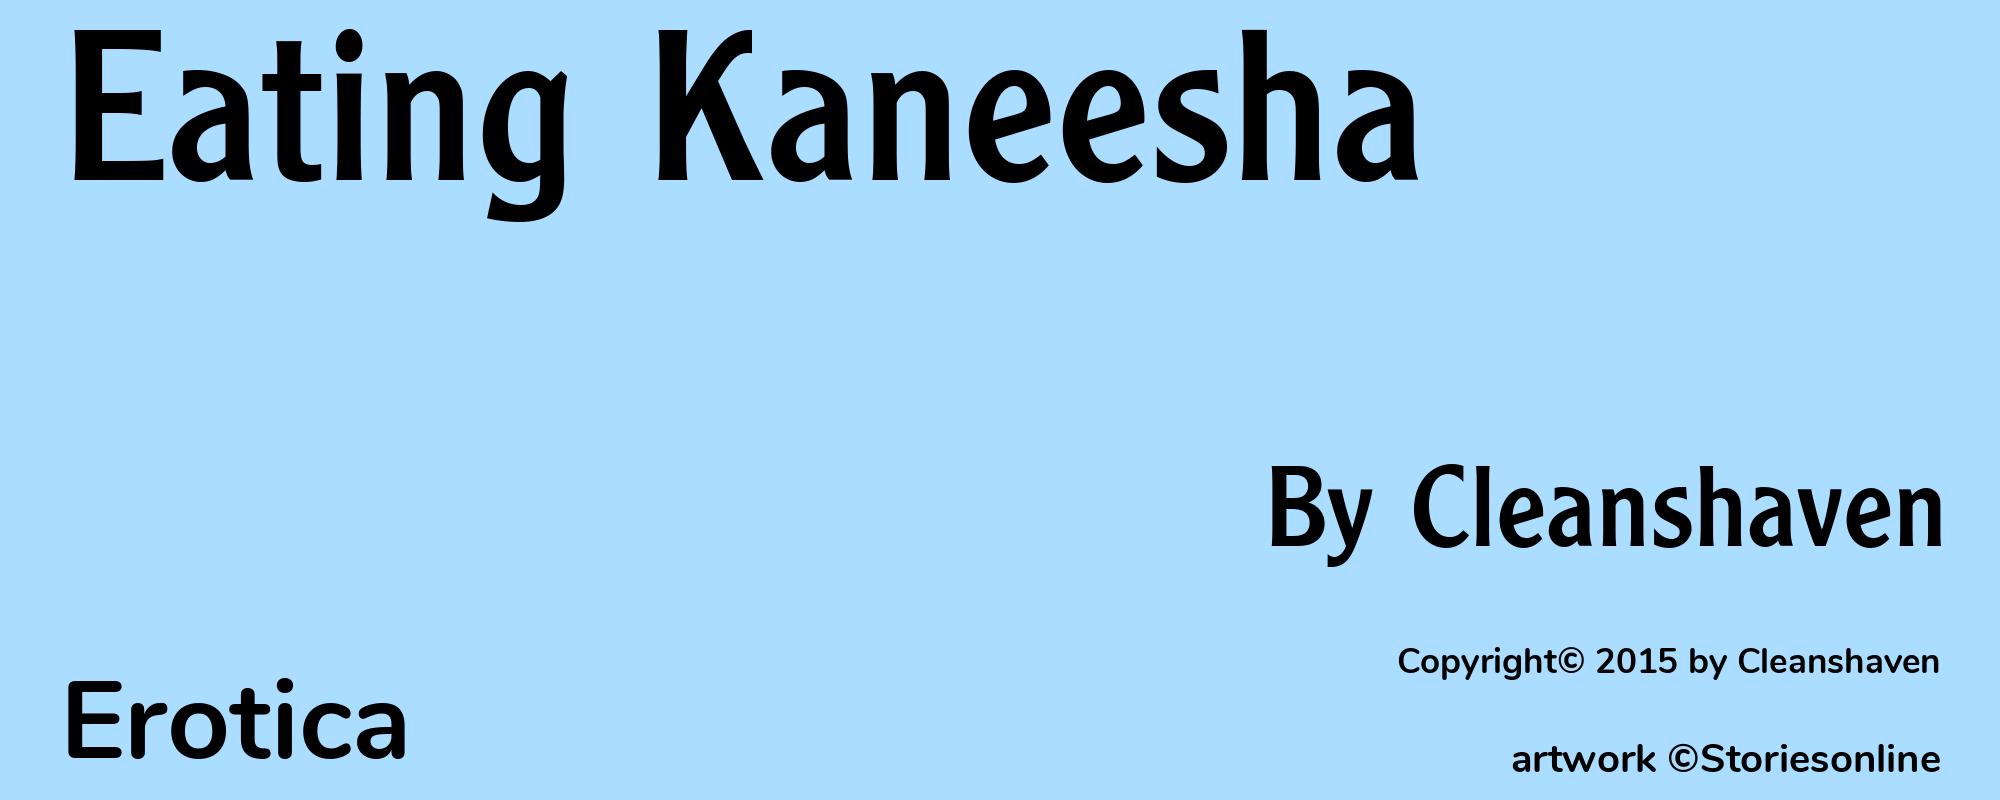 Eating Kaneesha - Cover